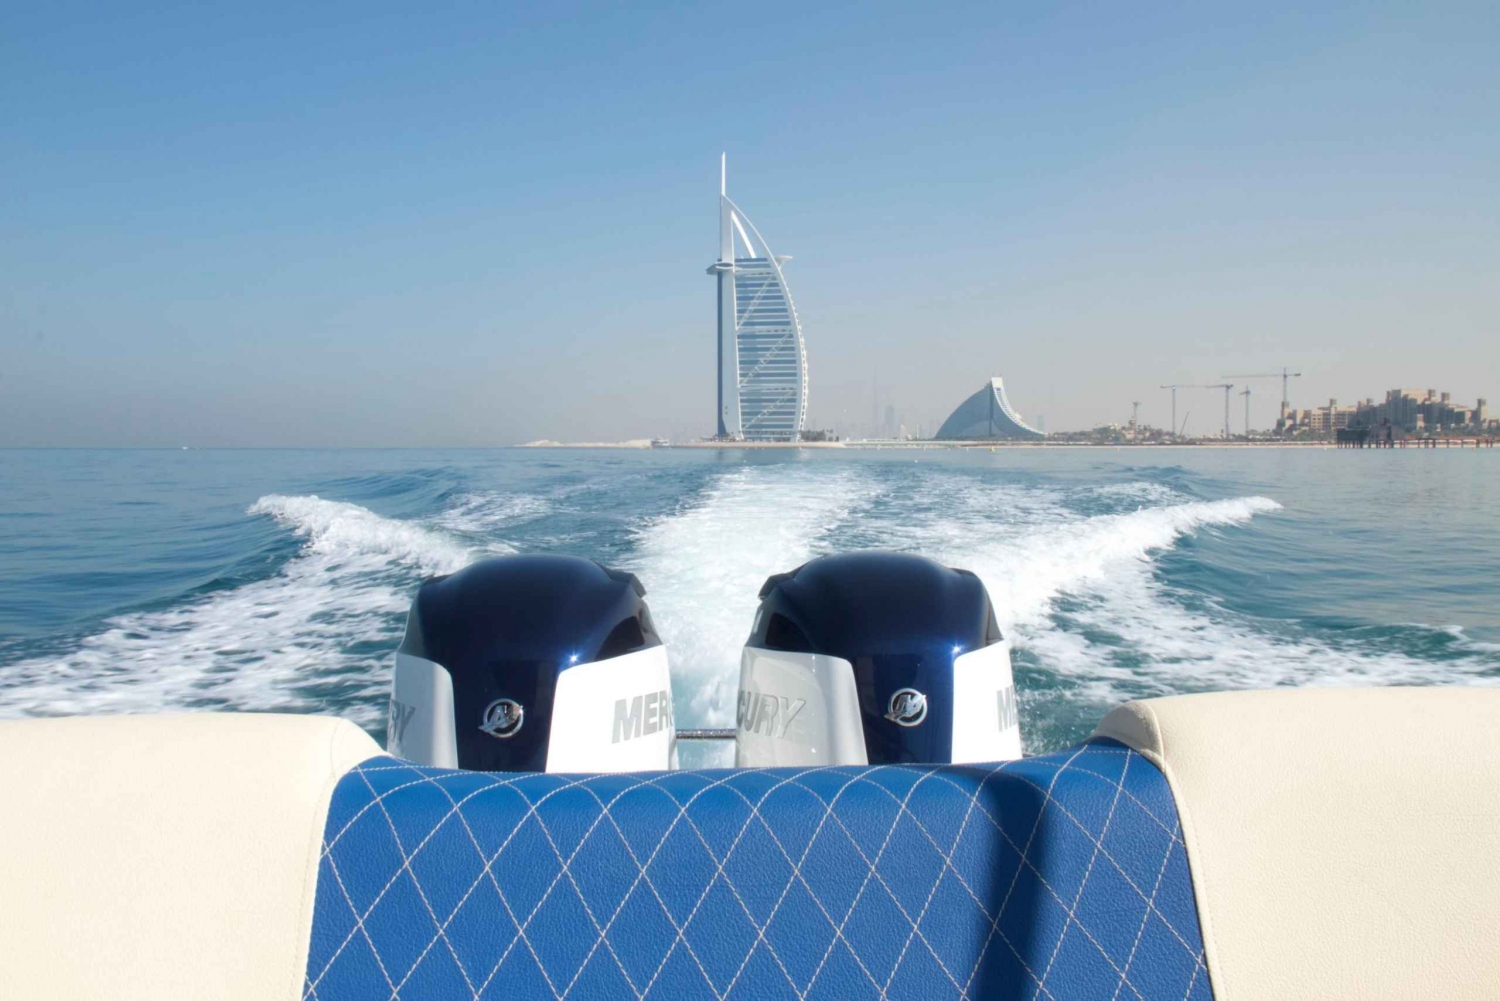 Dubai: Marina Private Boat Tour & Palm Jumeirah Sightseeing